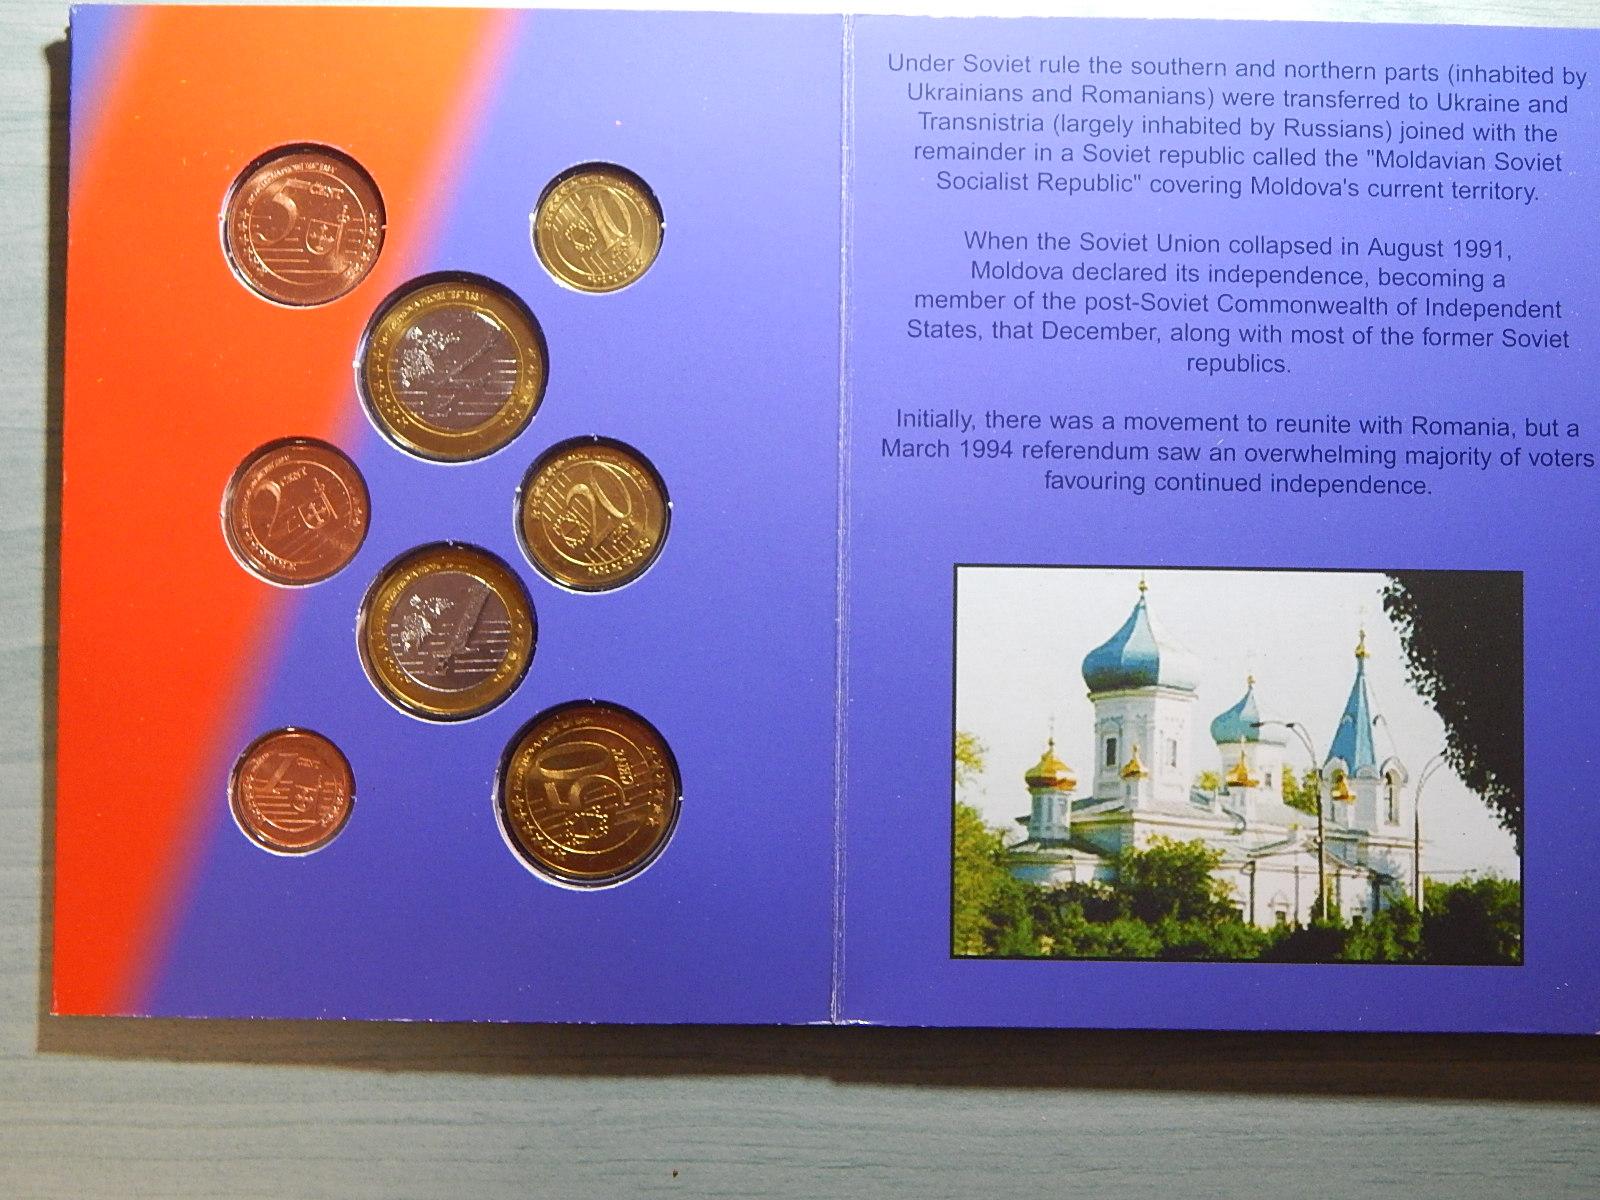 Moldávie EURO PROBE sada 2004 ve folderu UNC čKUF - Zberateľstvo